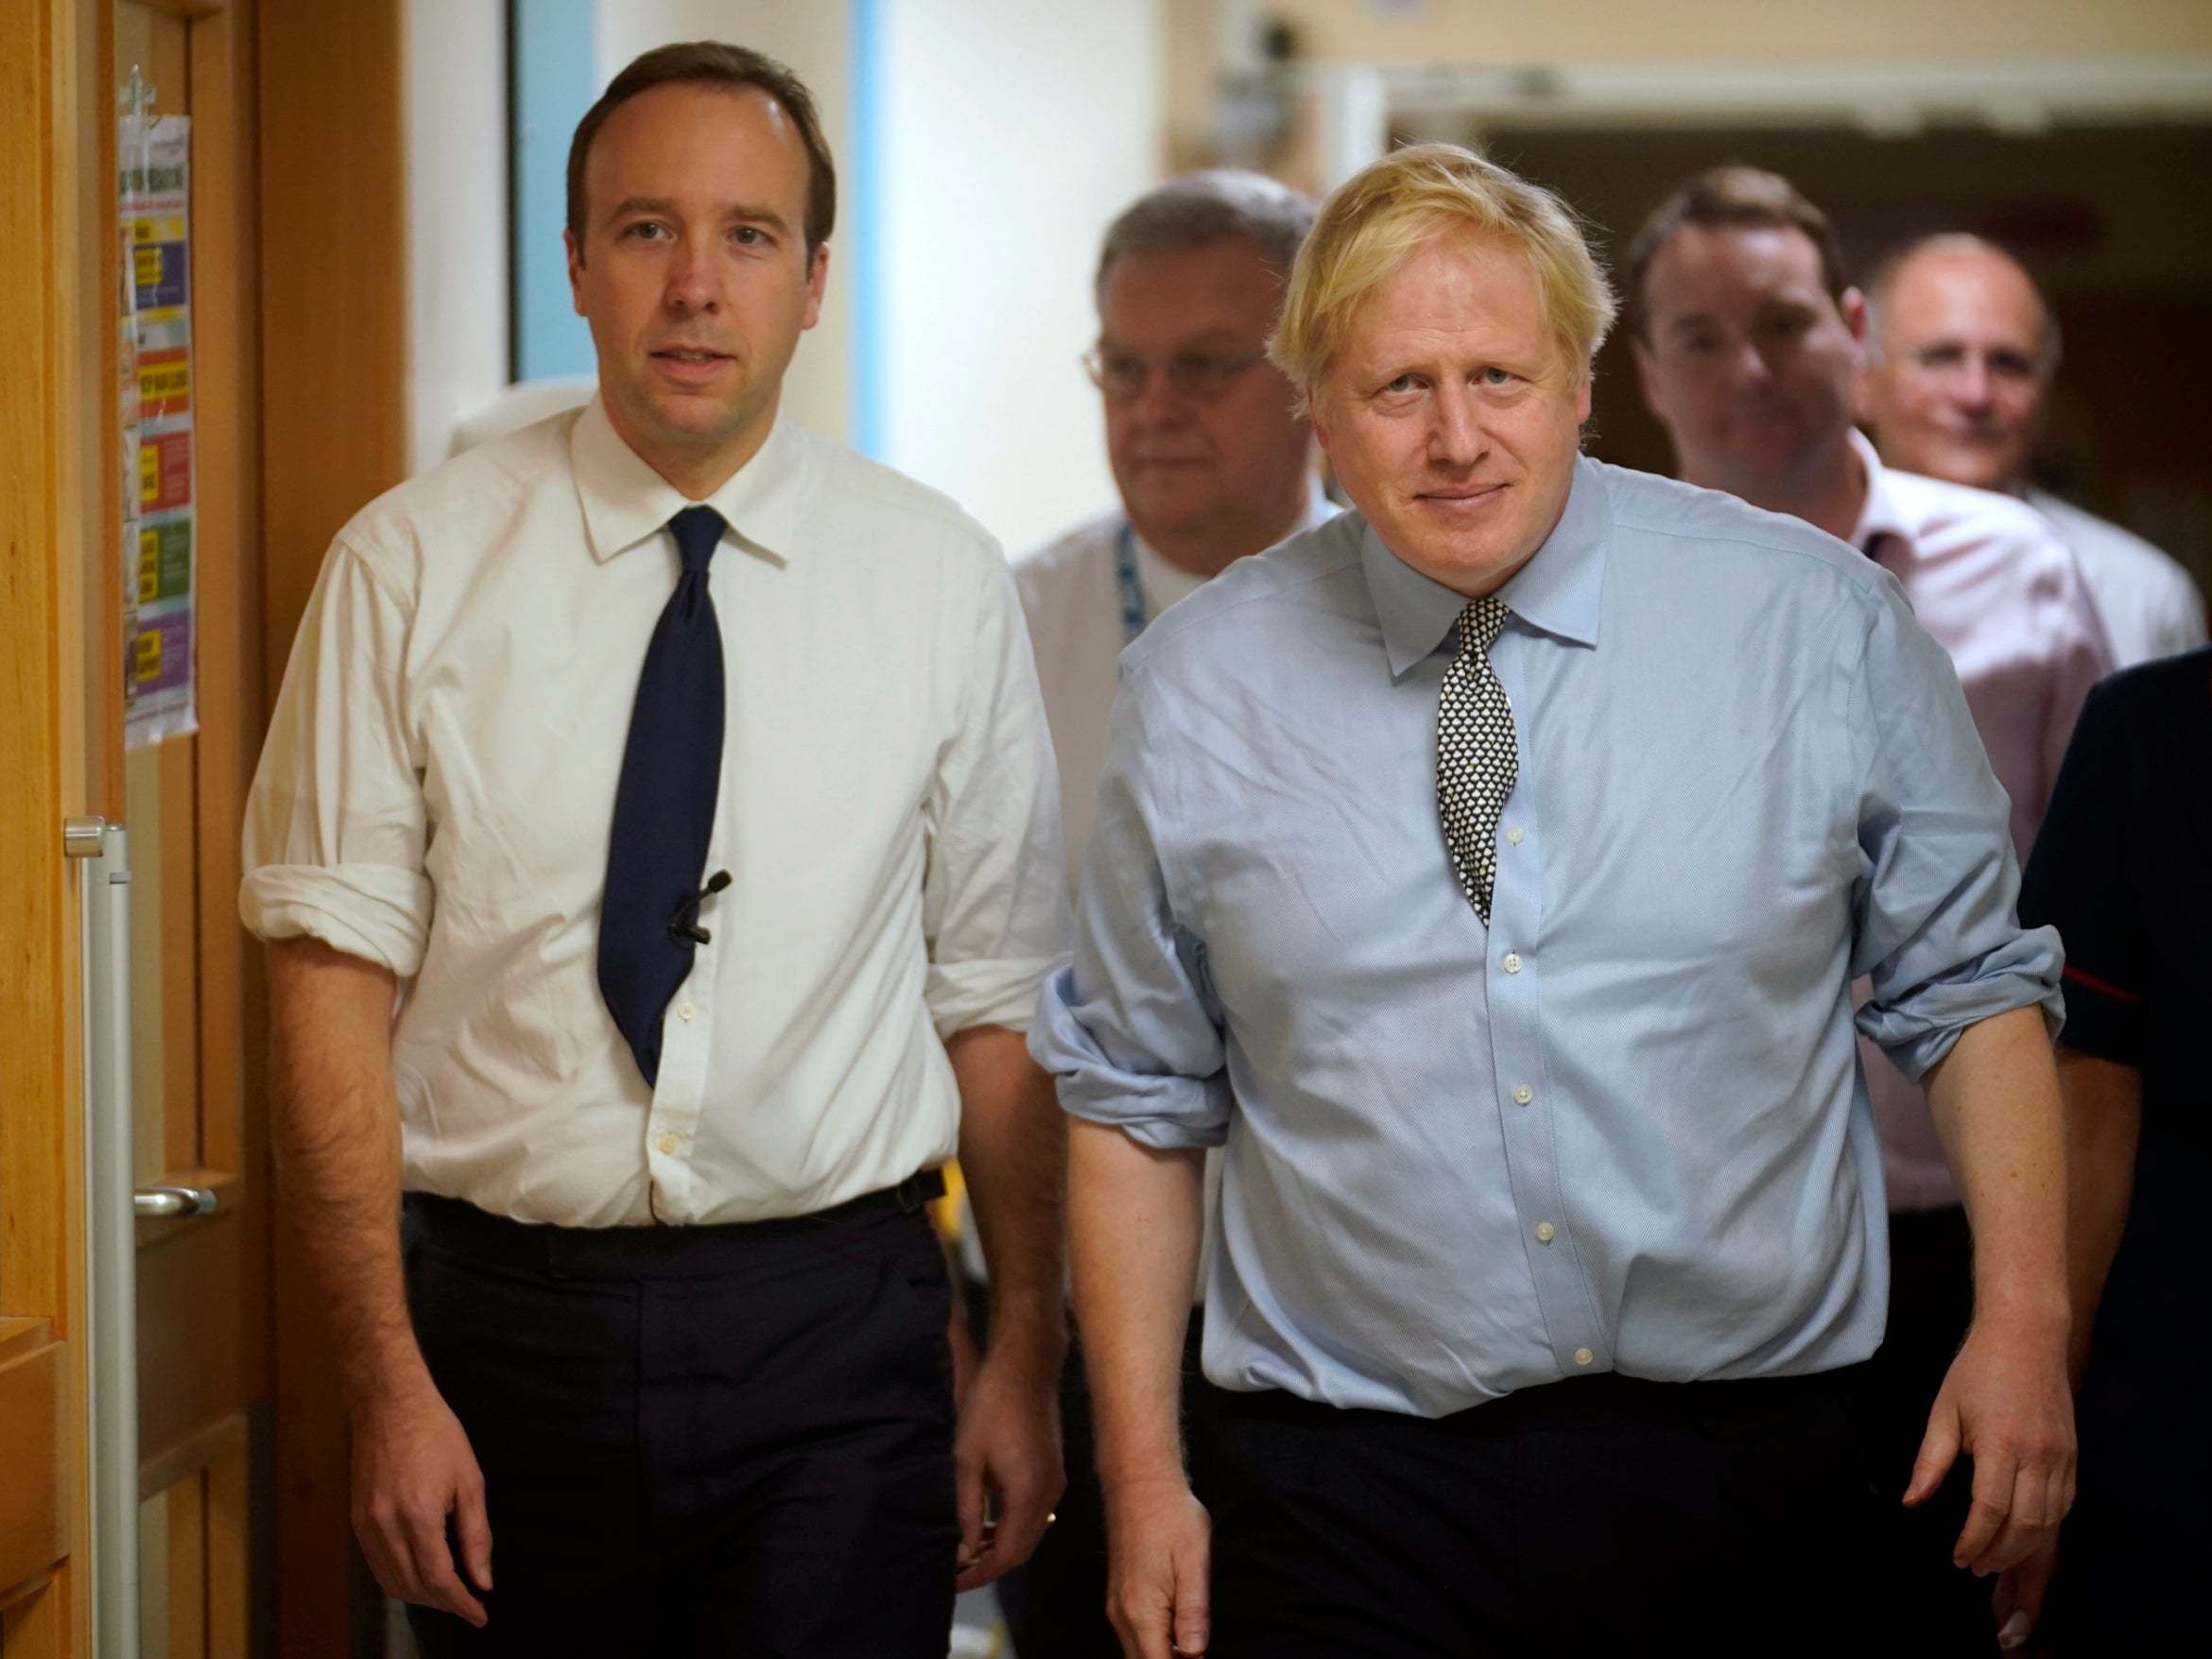 Matt Hancock and Boris Johnson face ‘cronyism’ allegation